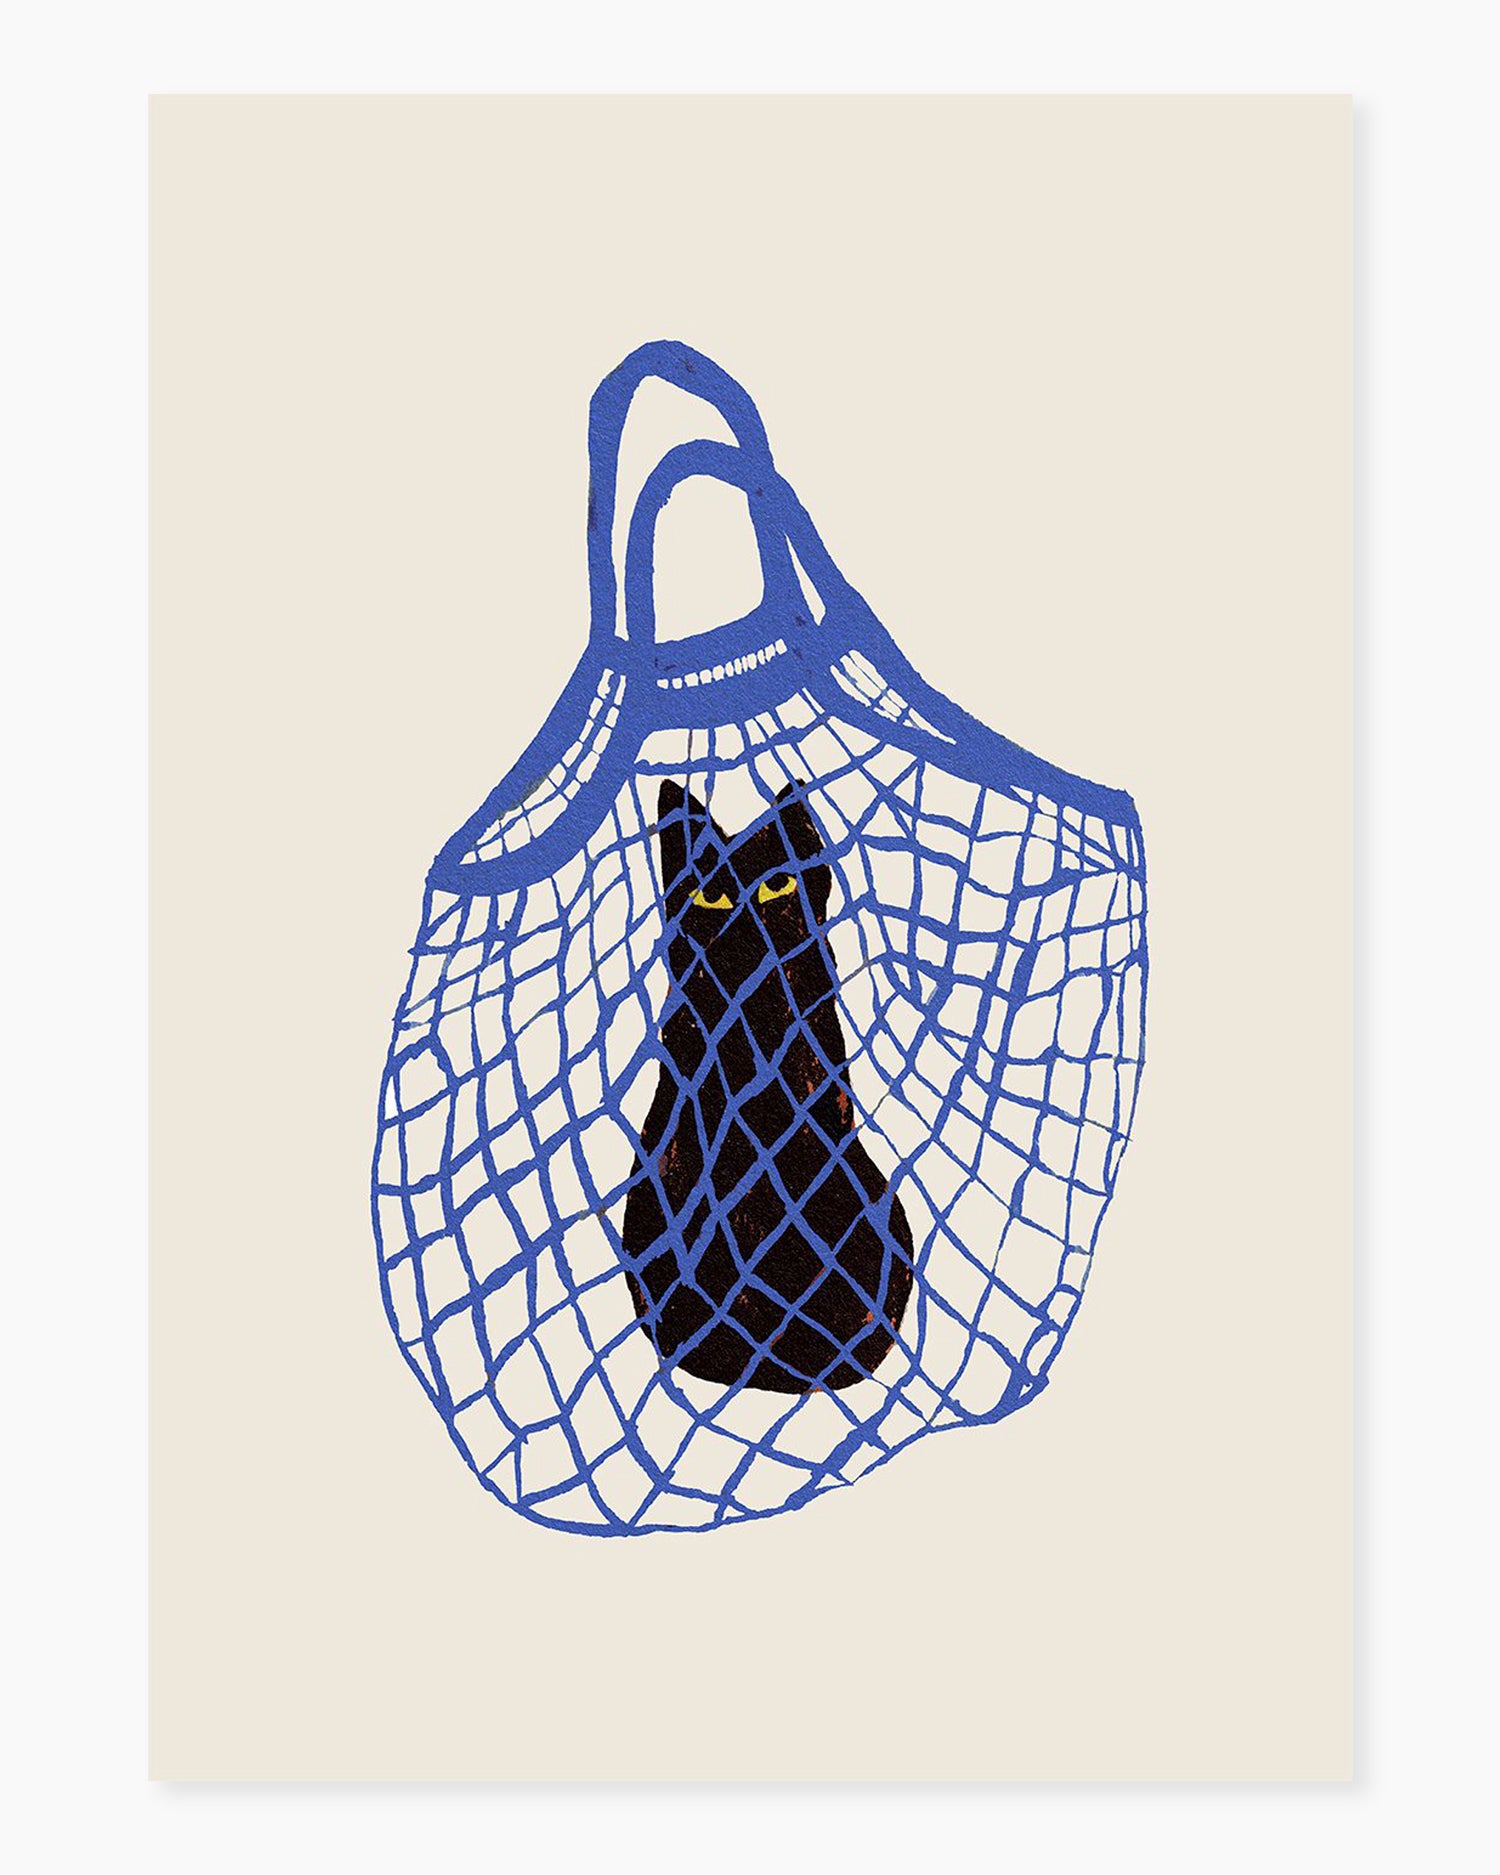 The Cat’s In The Bag - CHLOE PURPERO JOHNSON